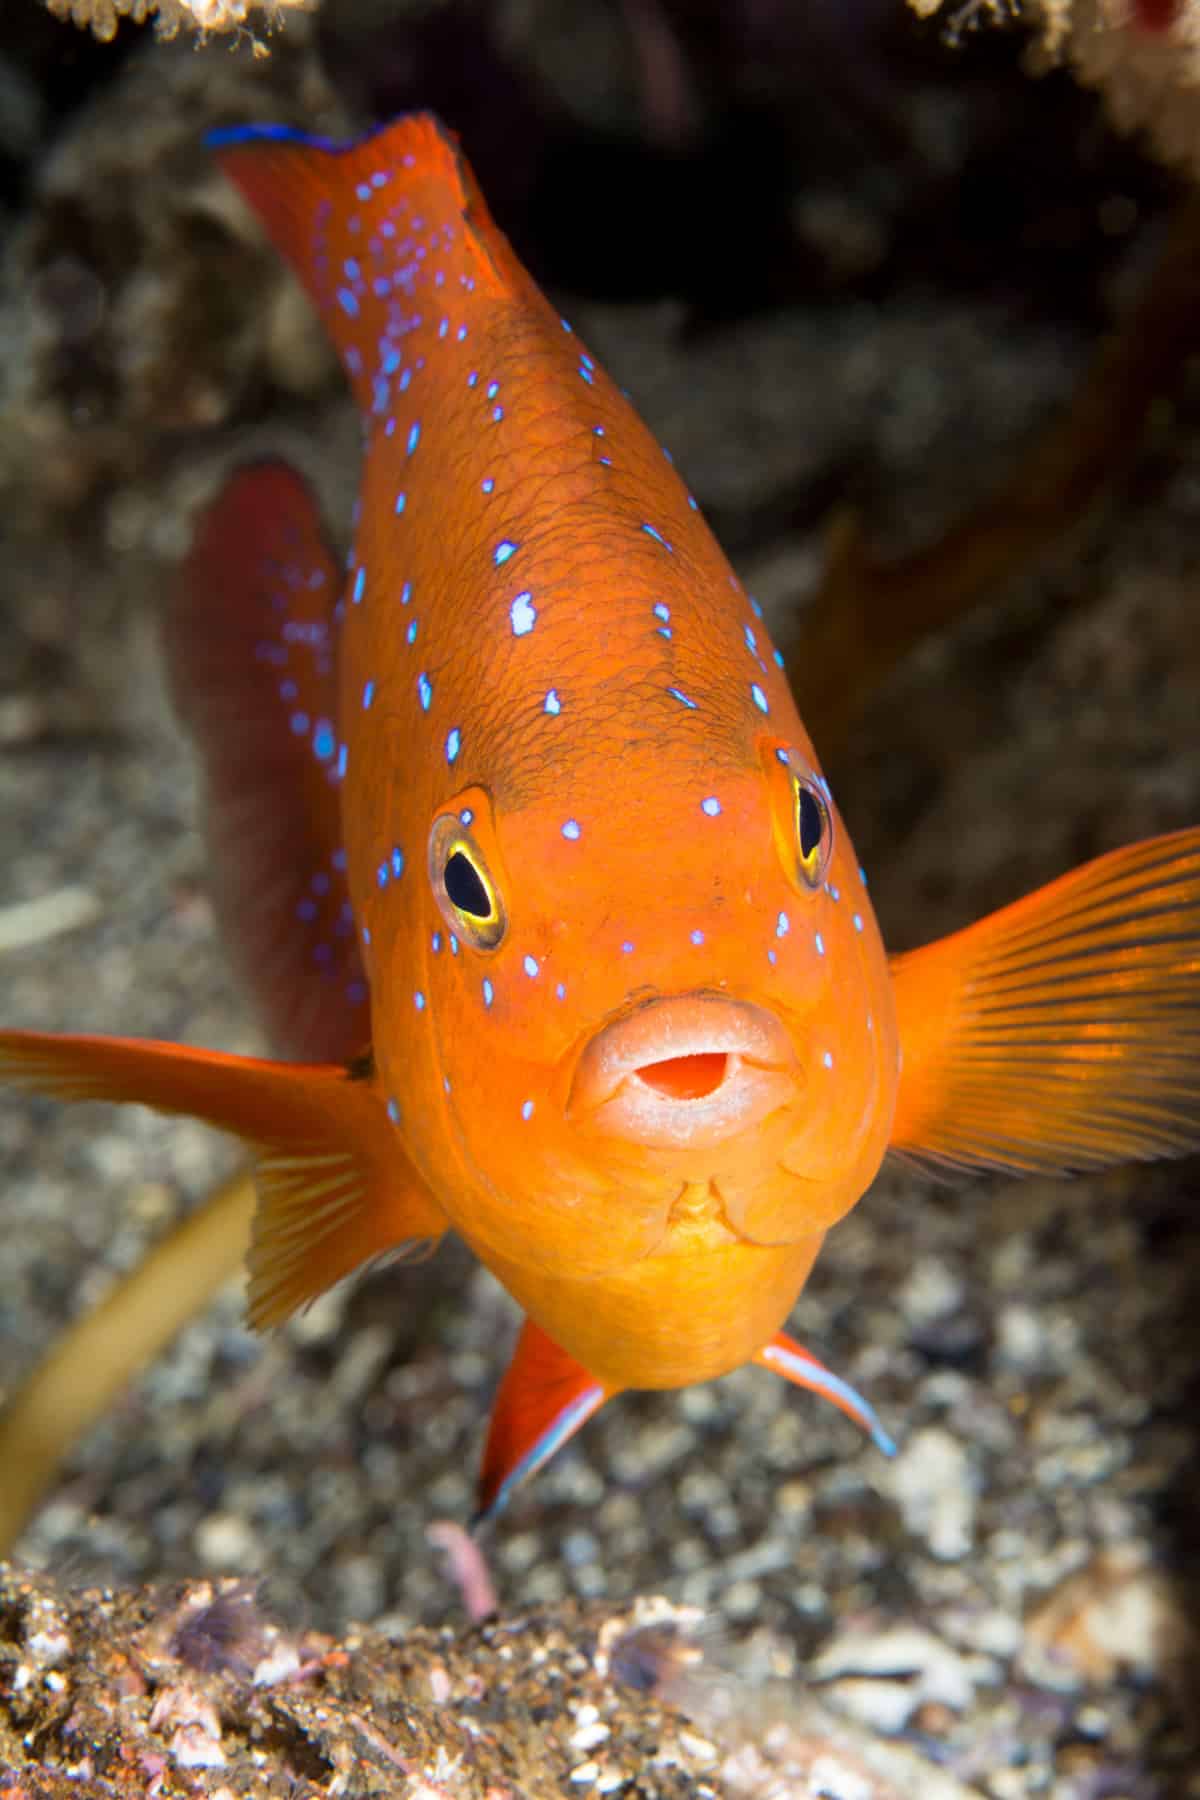 The bright orange Garibaldi fish looks like a large goldfish